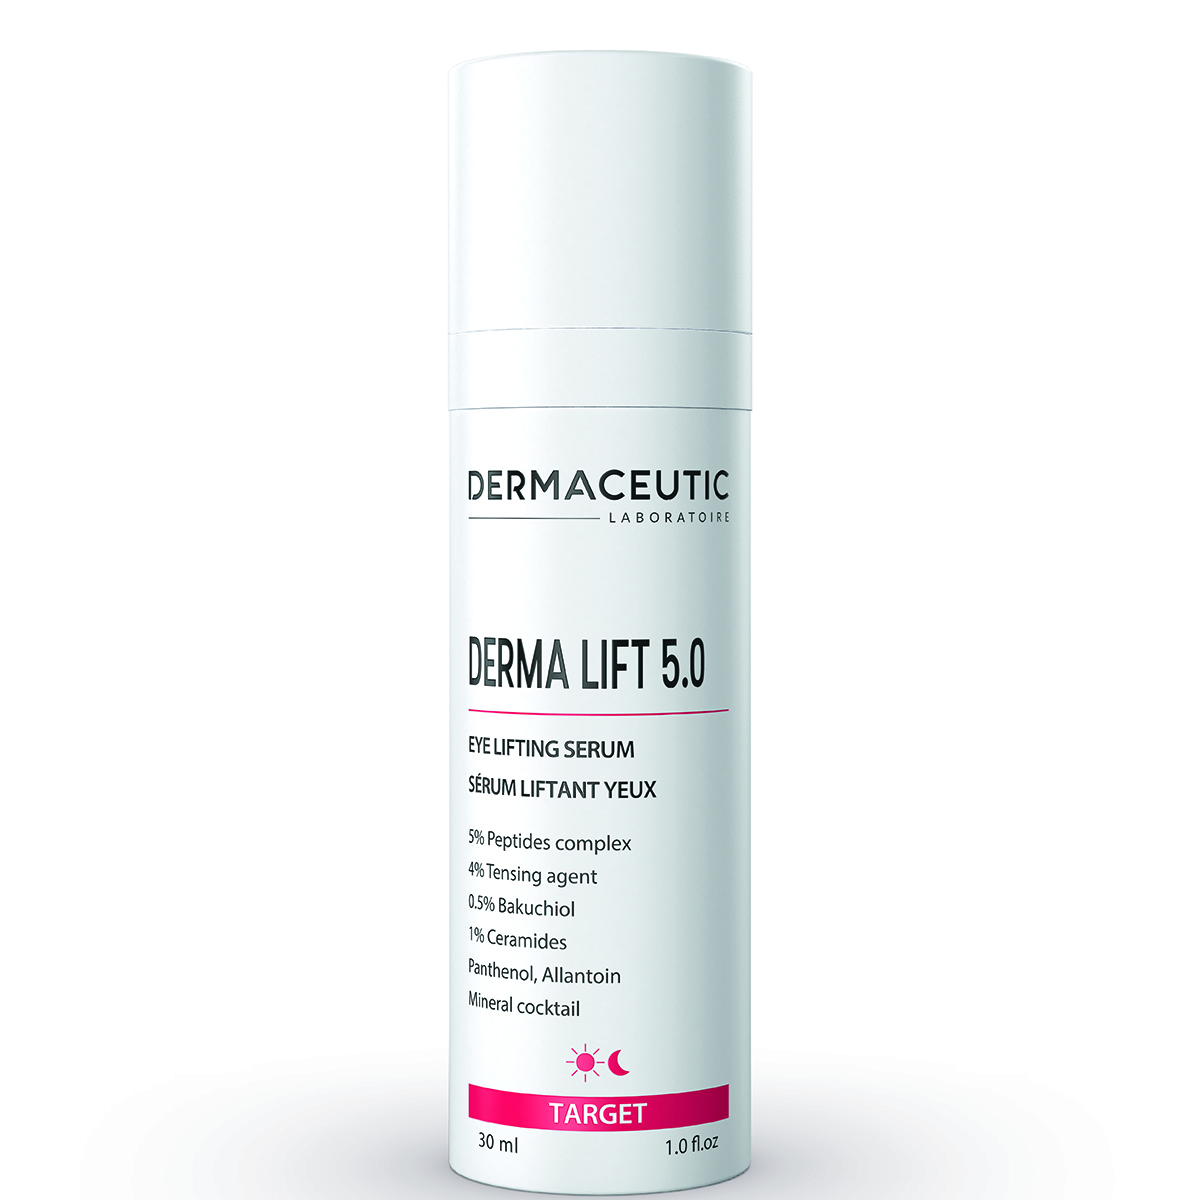 Dermaceutic Derma Lift Serum 5.0